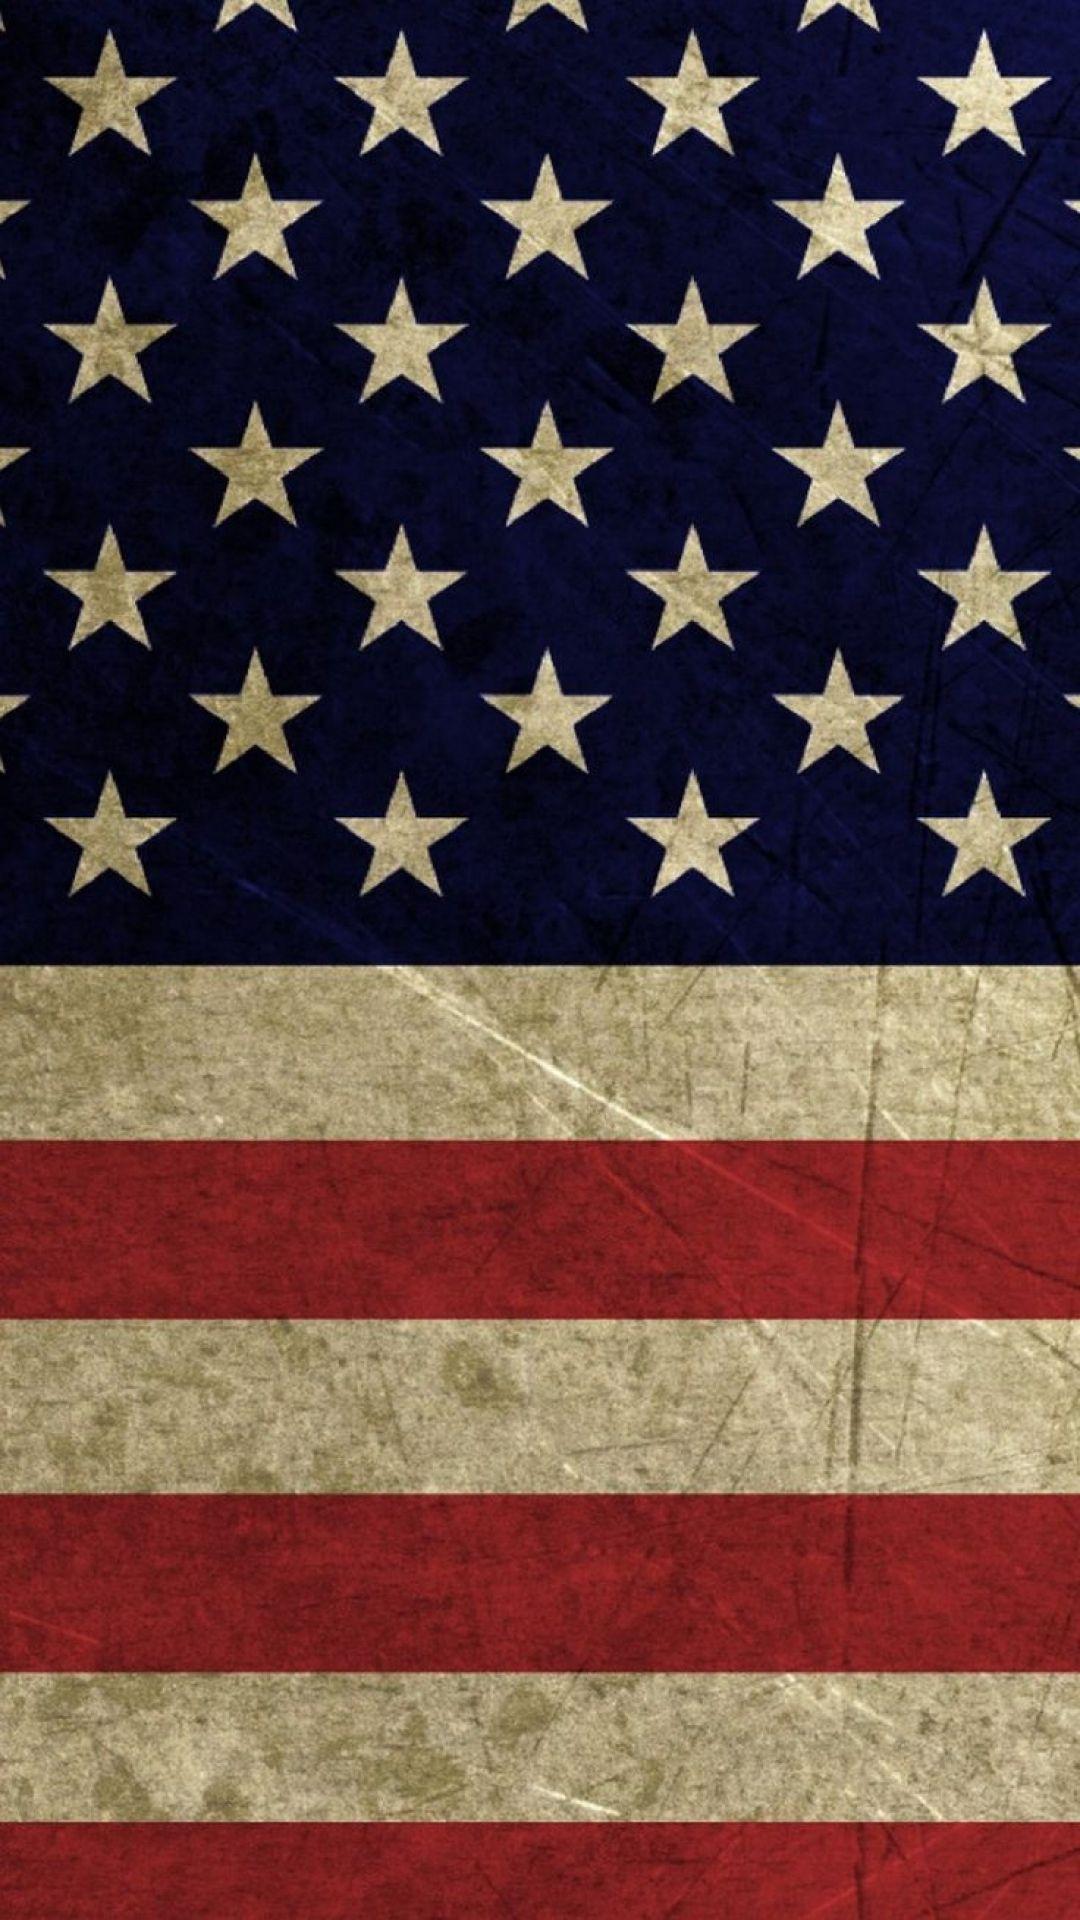 American Flag Background Image